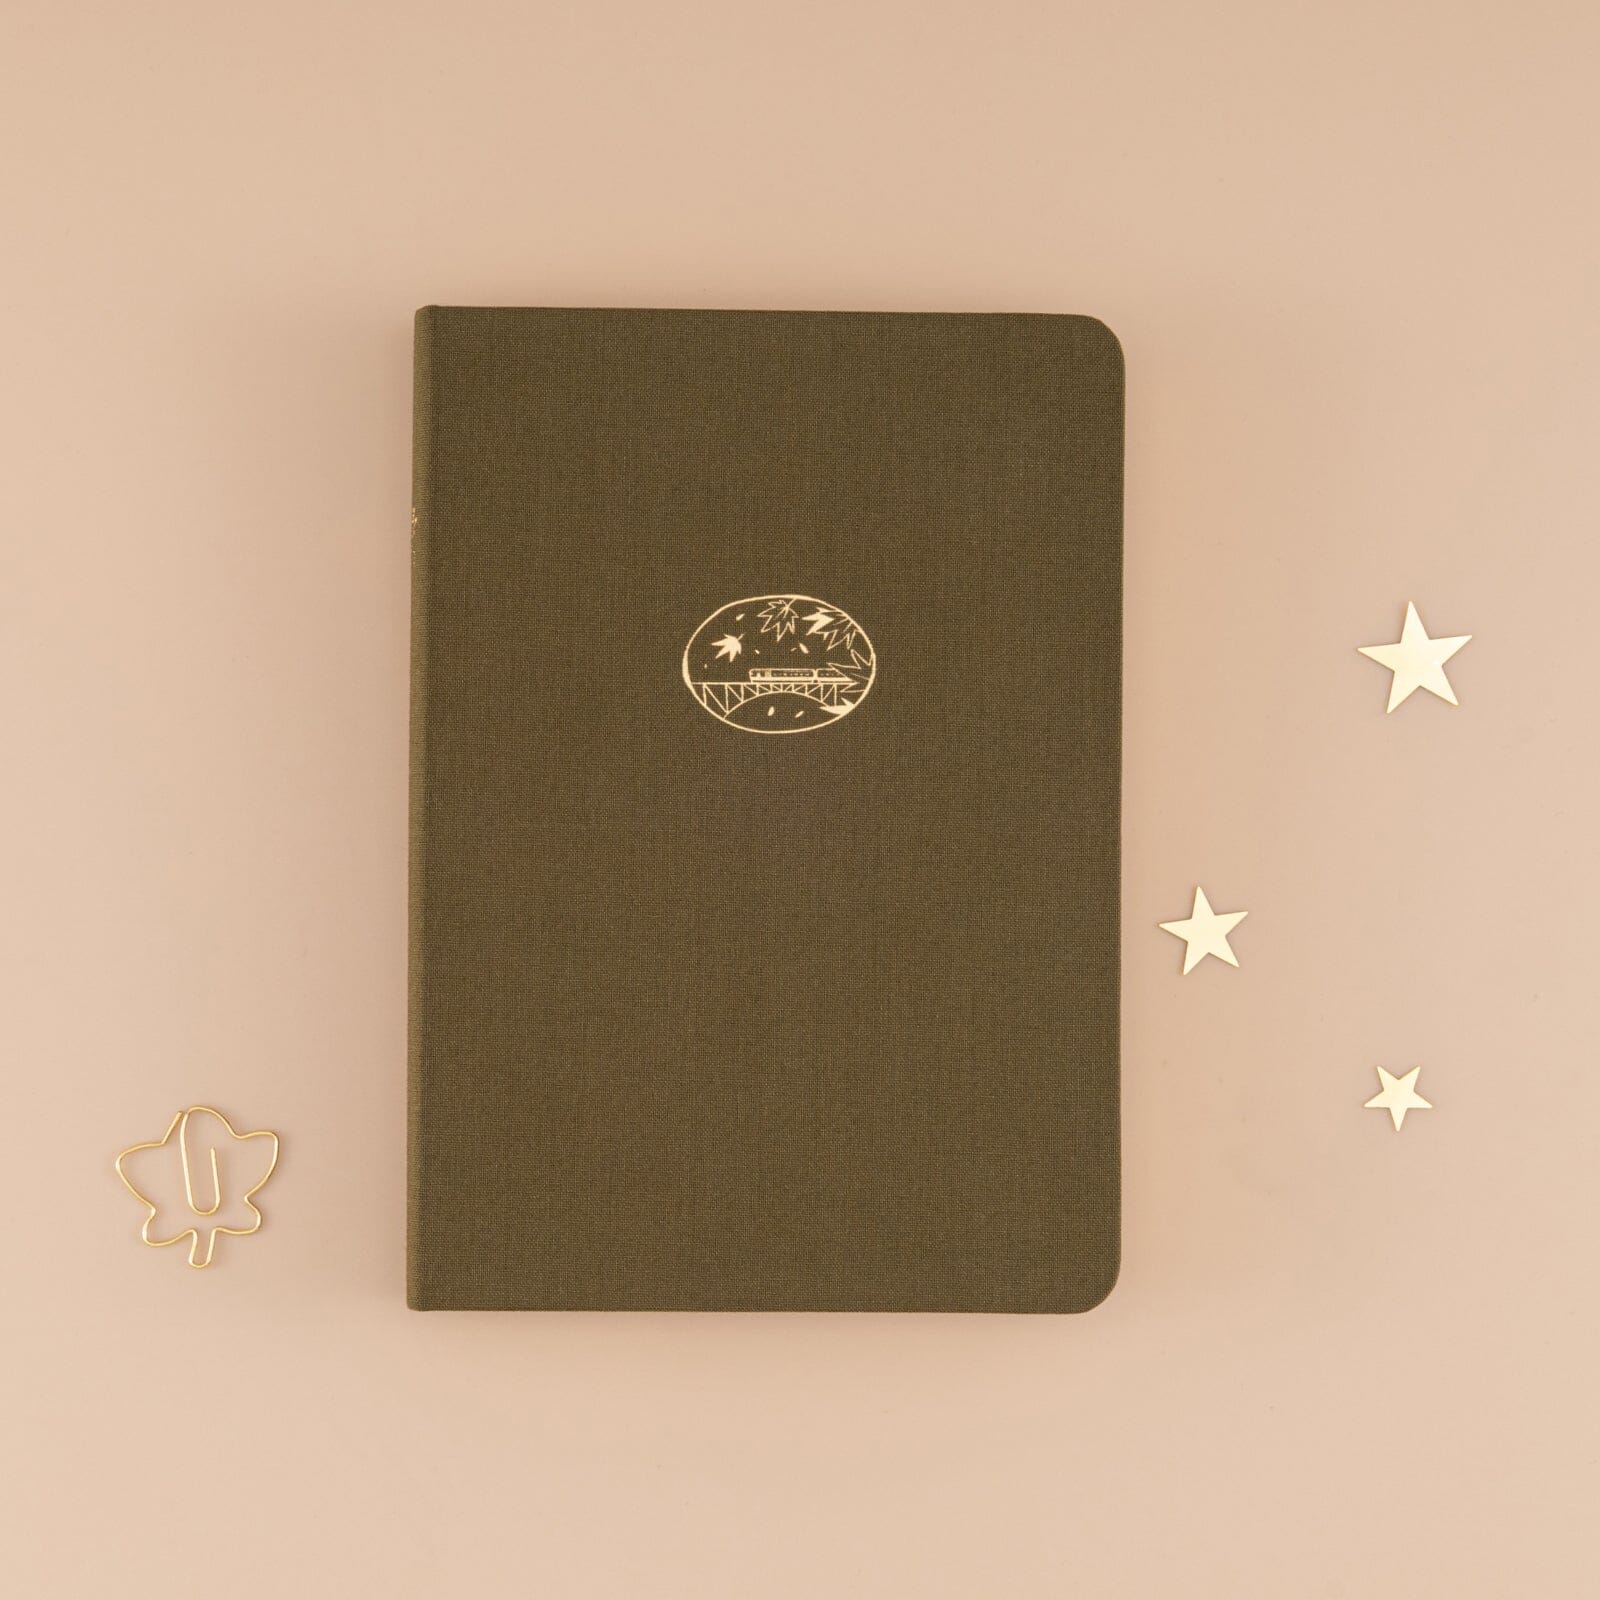 Tsuki ‘Golden Hour’ Limited Edition Bullet Journal Set ☾